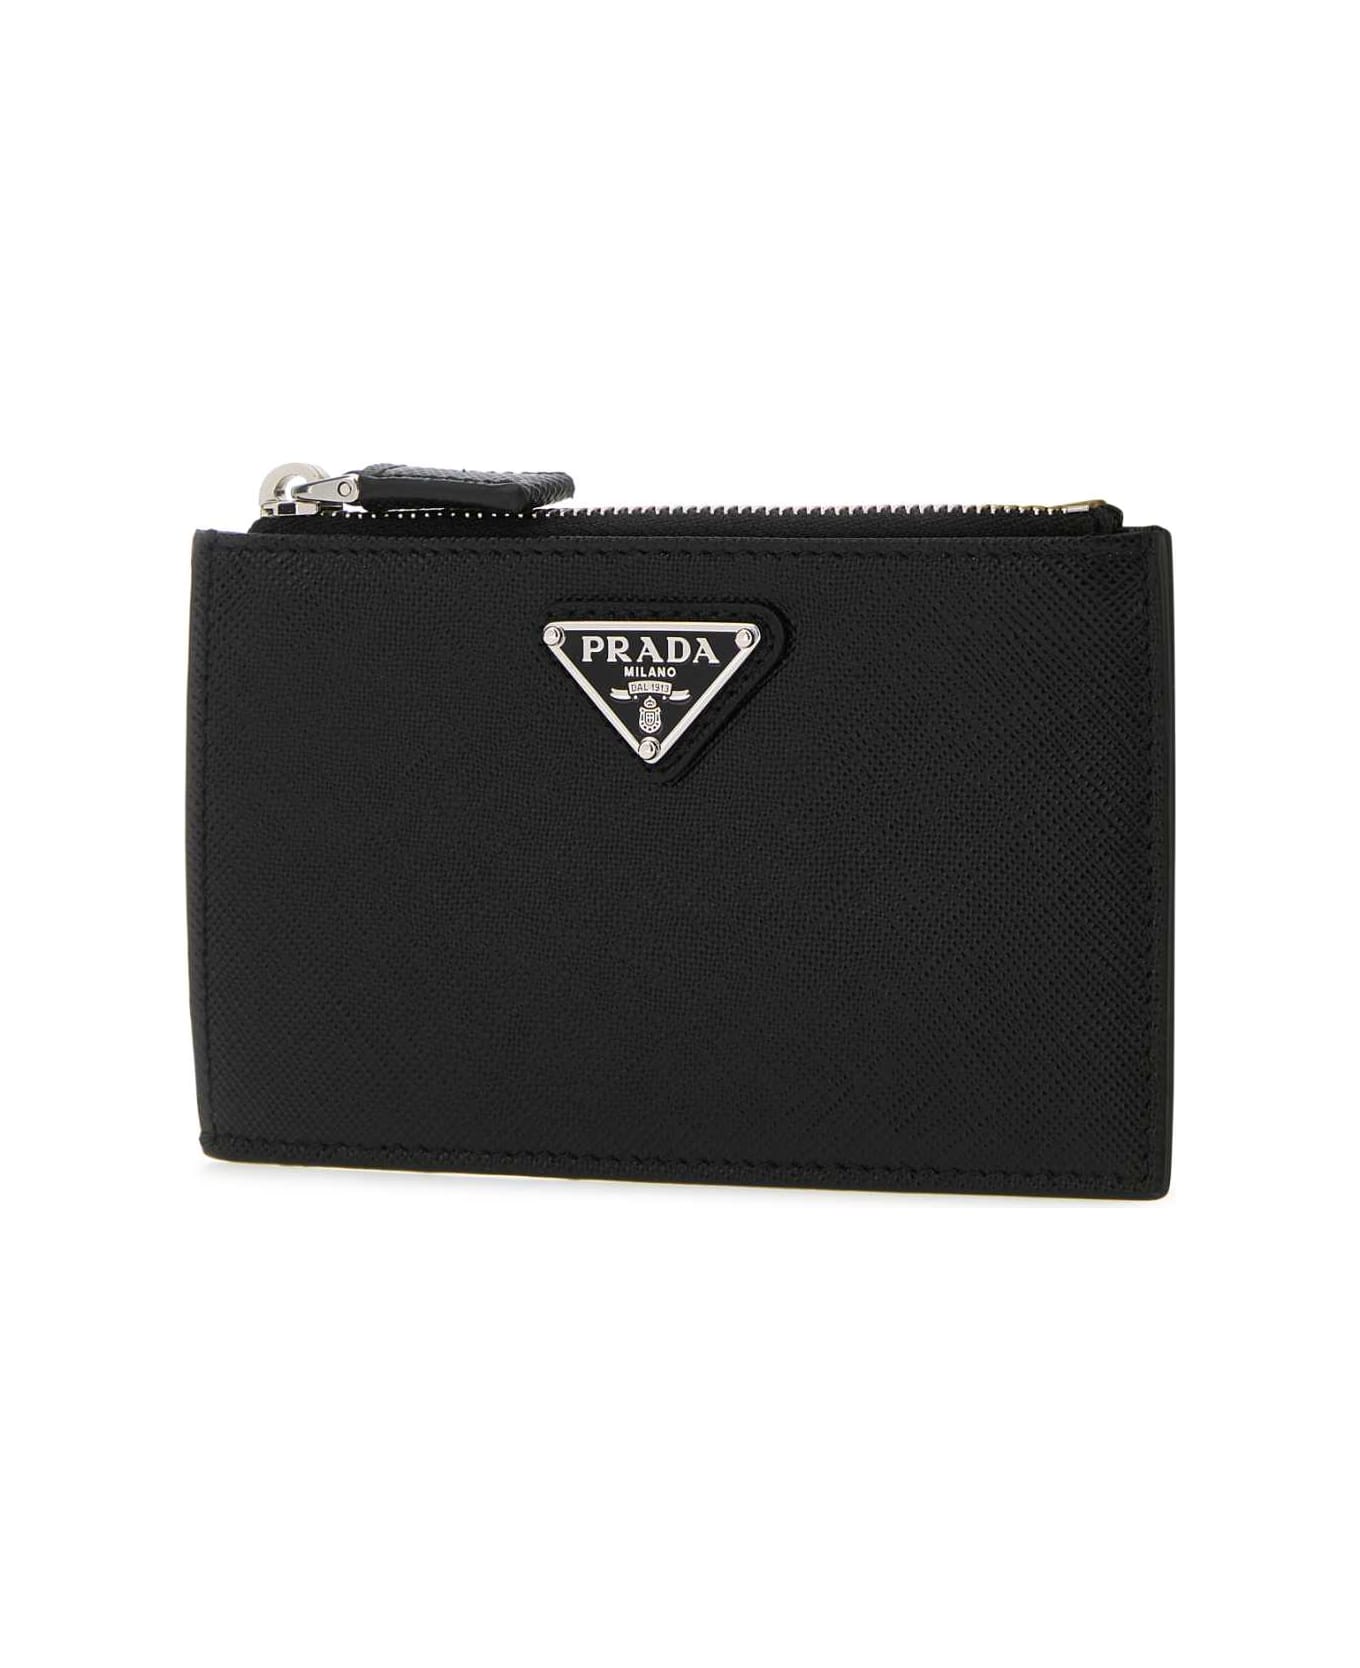 Prada Black Leather Card Holder - NERO 財布